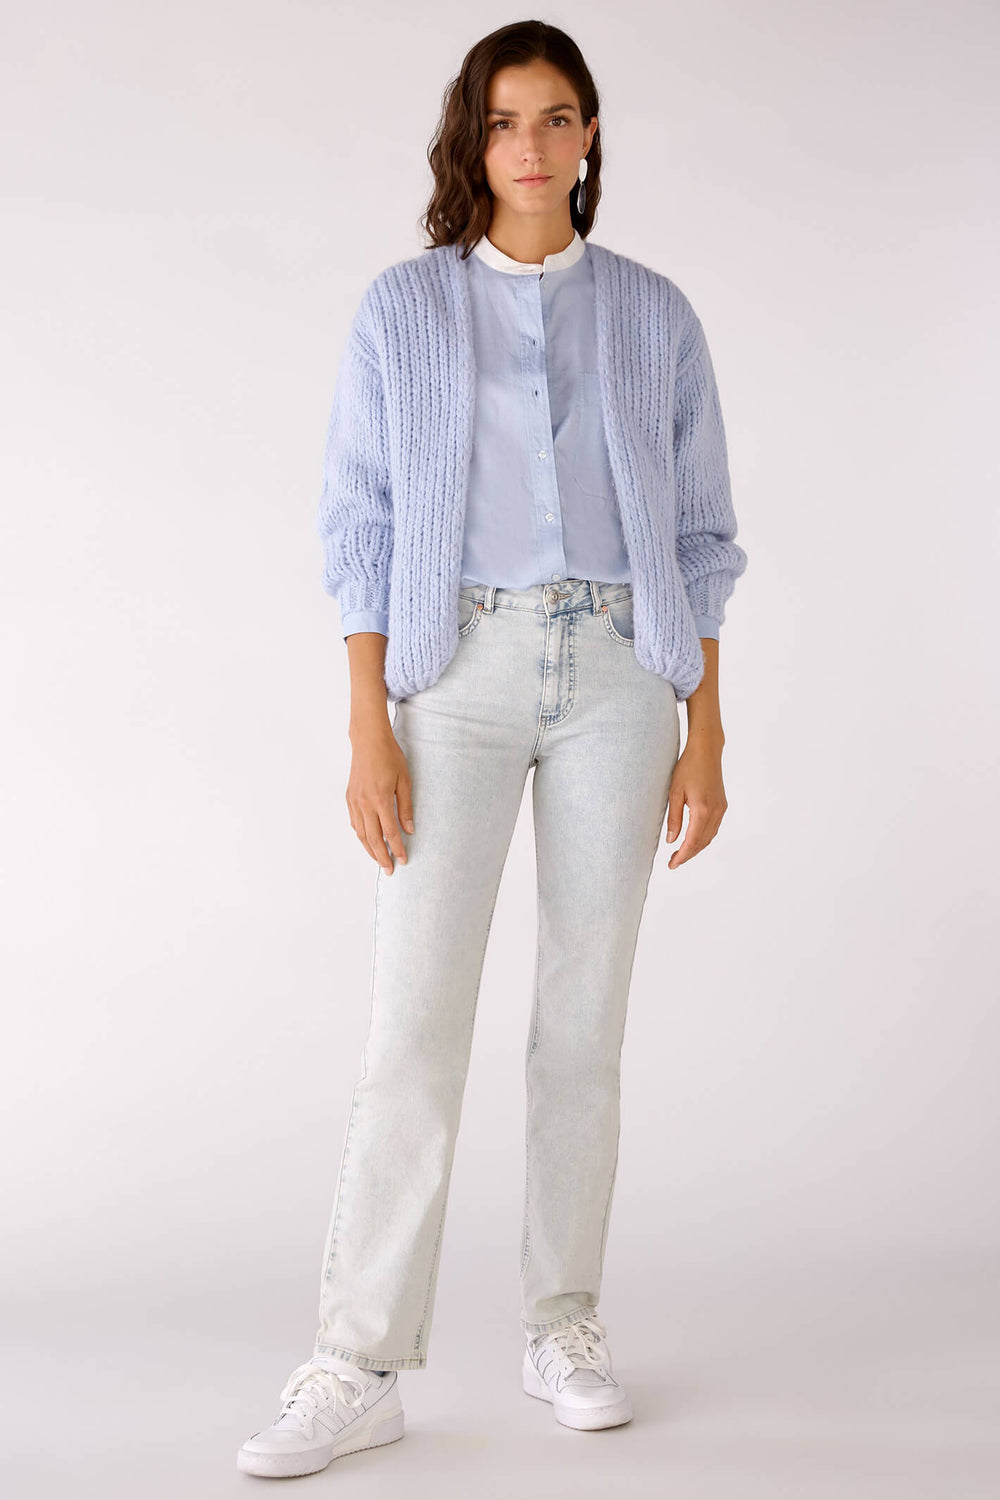 Oui 78229 Blue Collarless Shirt Blouse - Olivia Grace Fashion